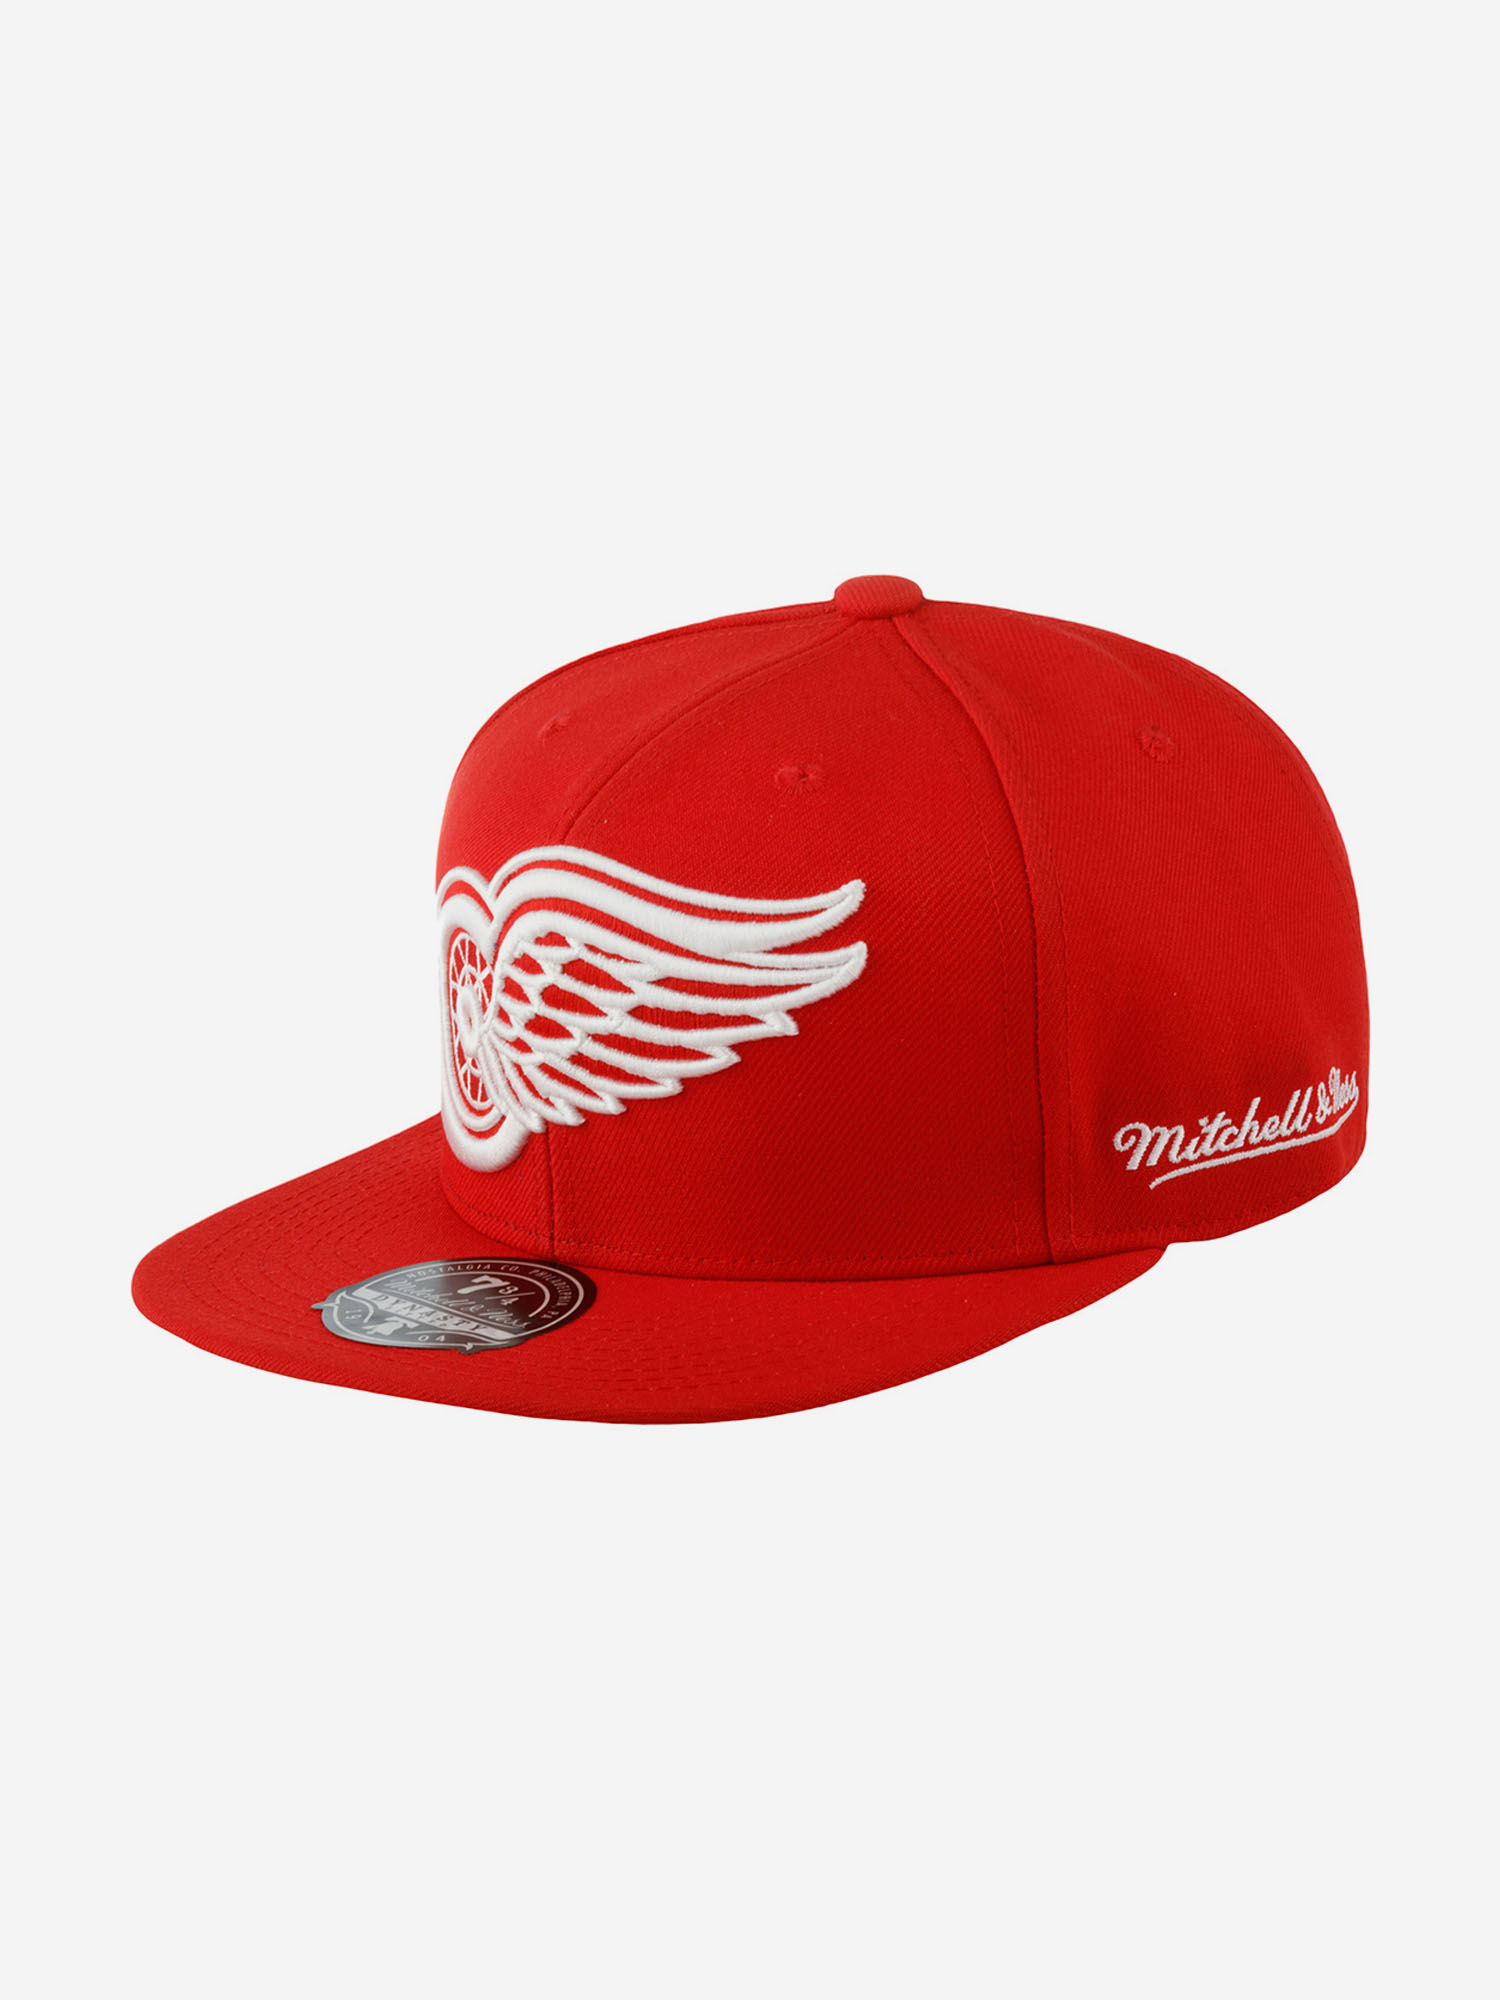 Бейсболка с прямым козырьком MITCHELL NESS 6HSFSH22084-DRWRED1 Detroit Red Wings NHL (красный), Красный